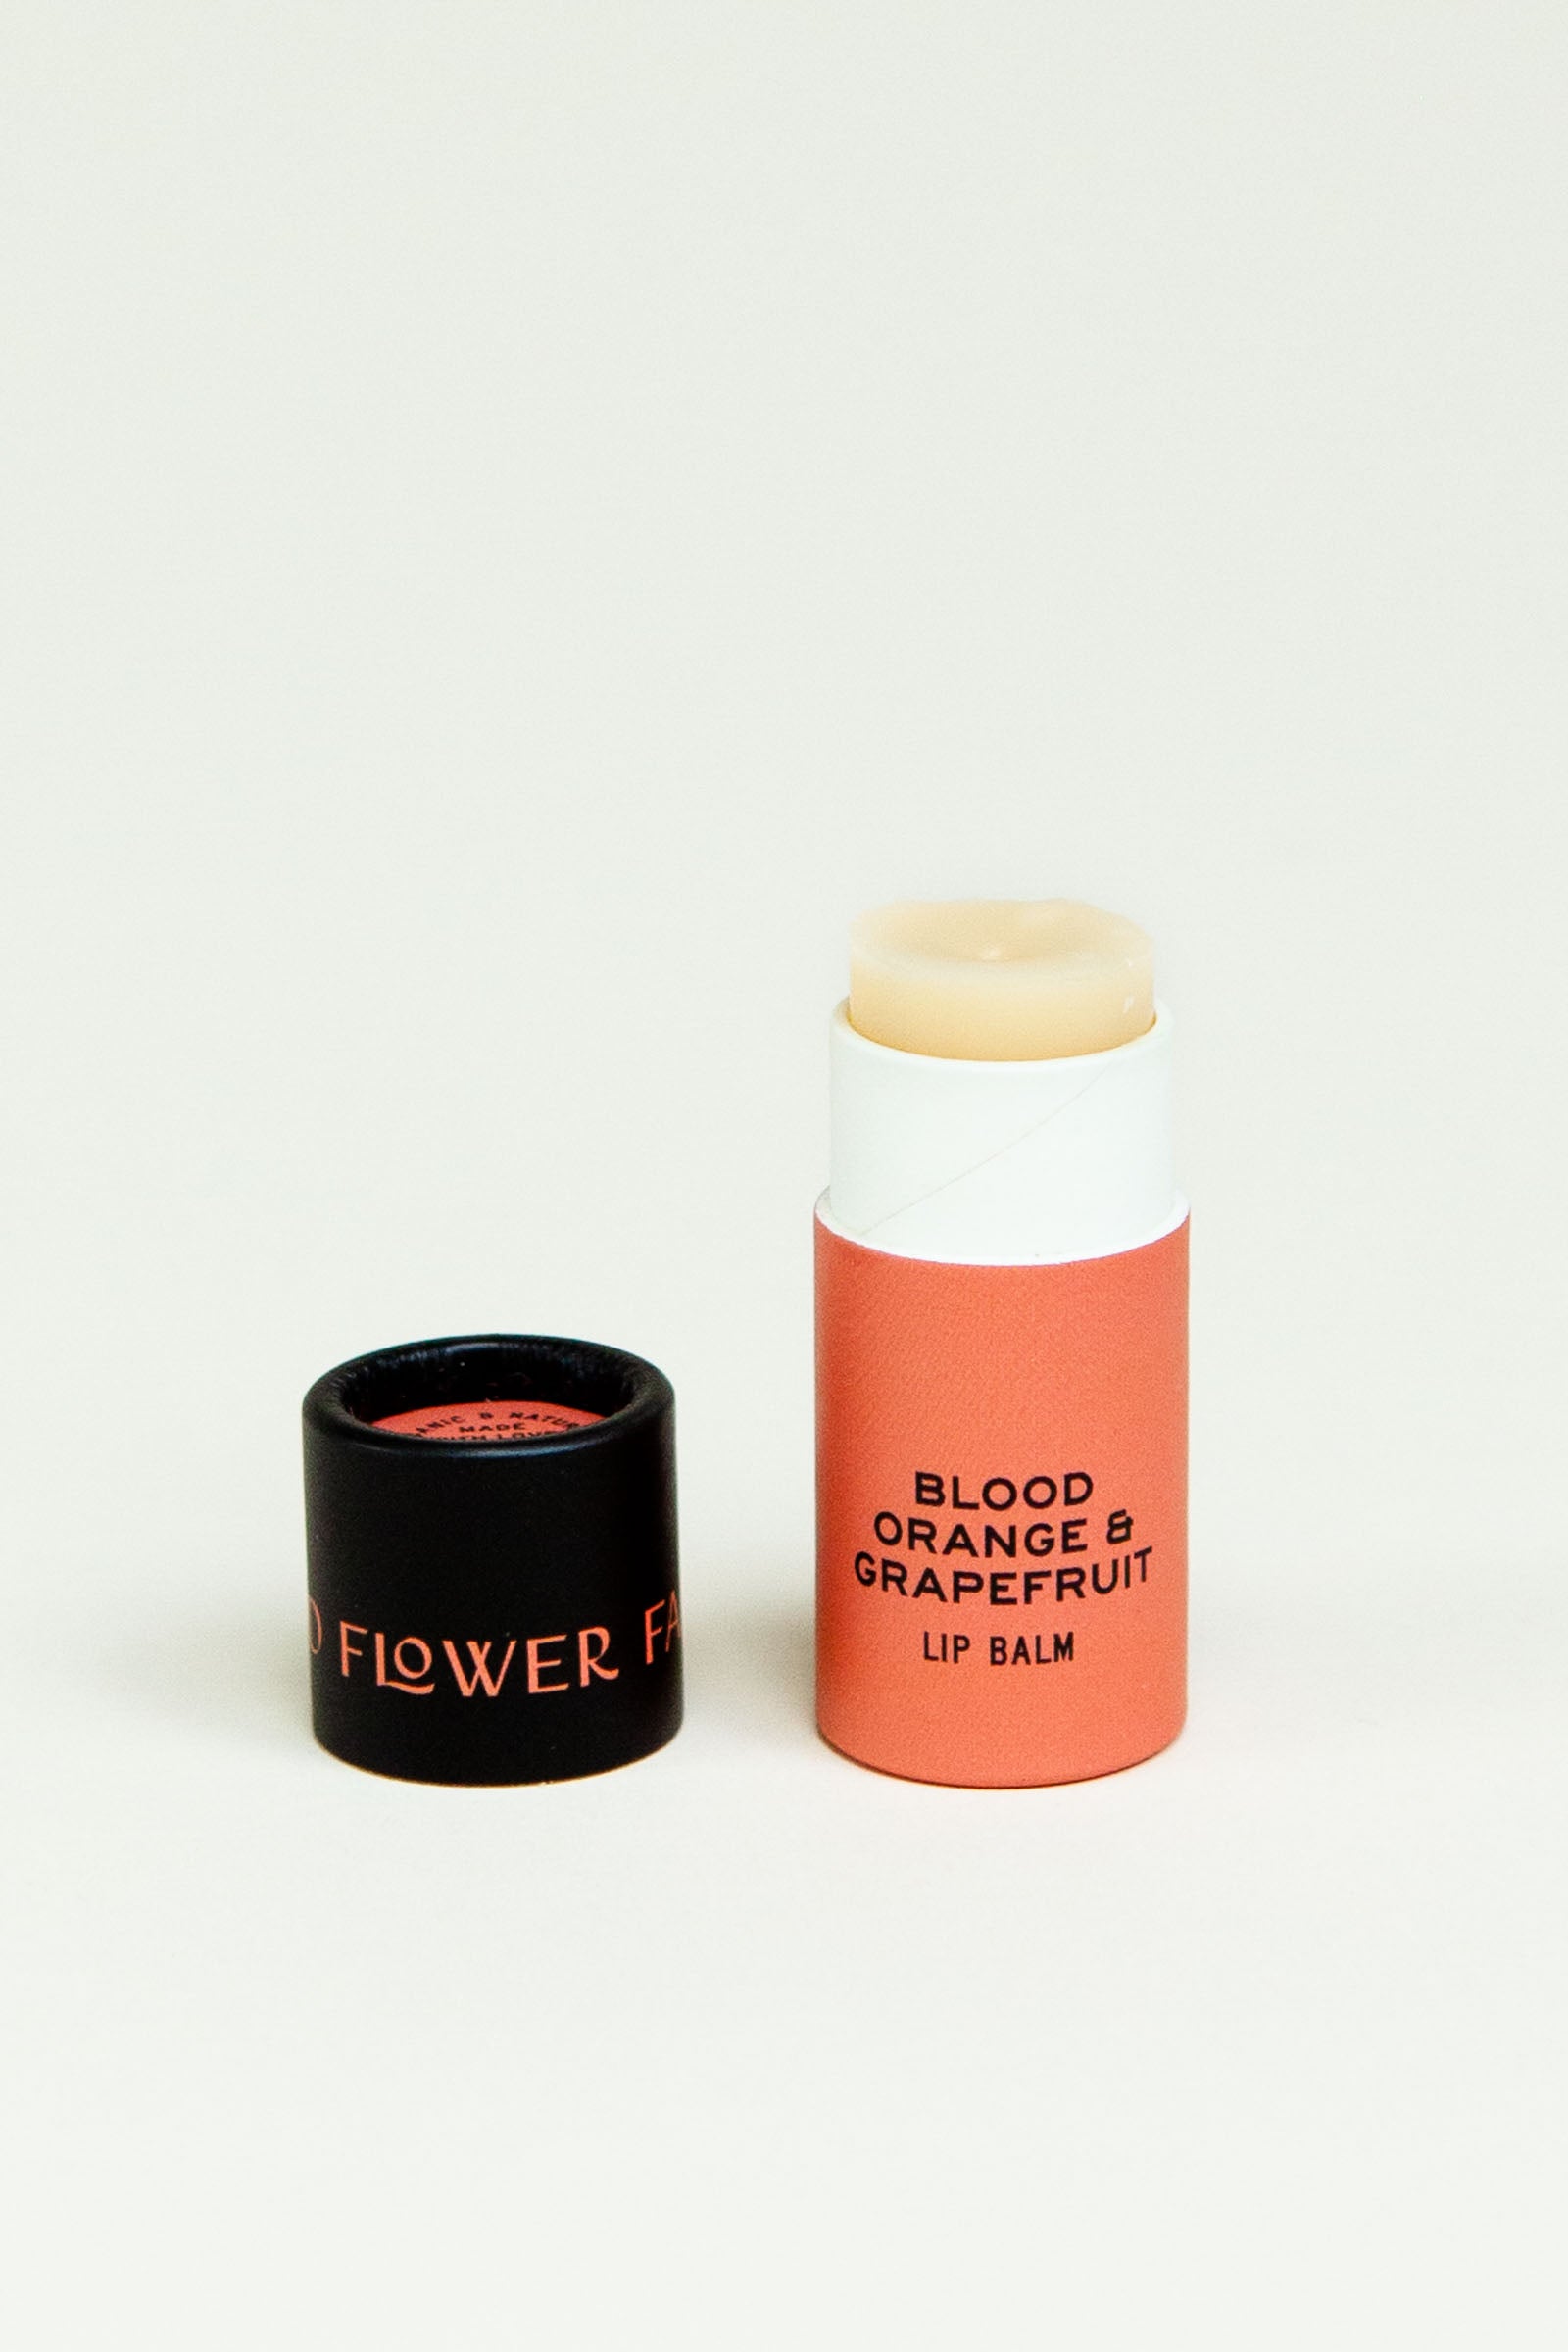 Blood Orange & Grapefruit Lip Balm / 0.3 oz Biodegradable Plastic-Free Tube